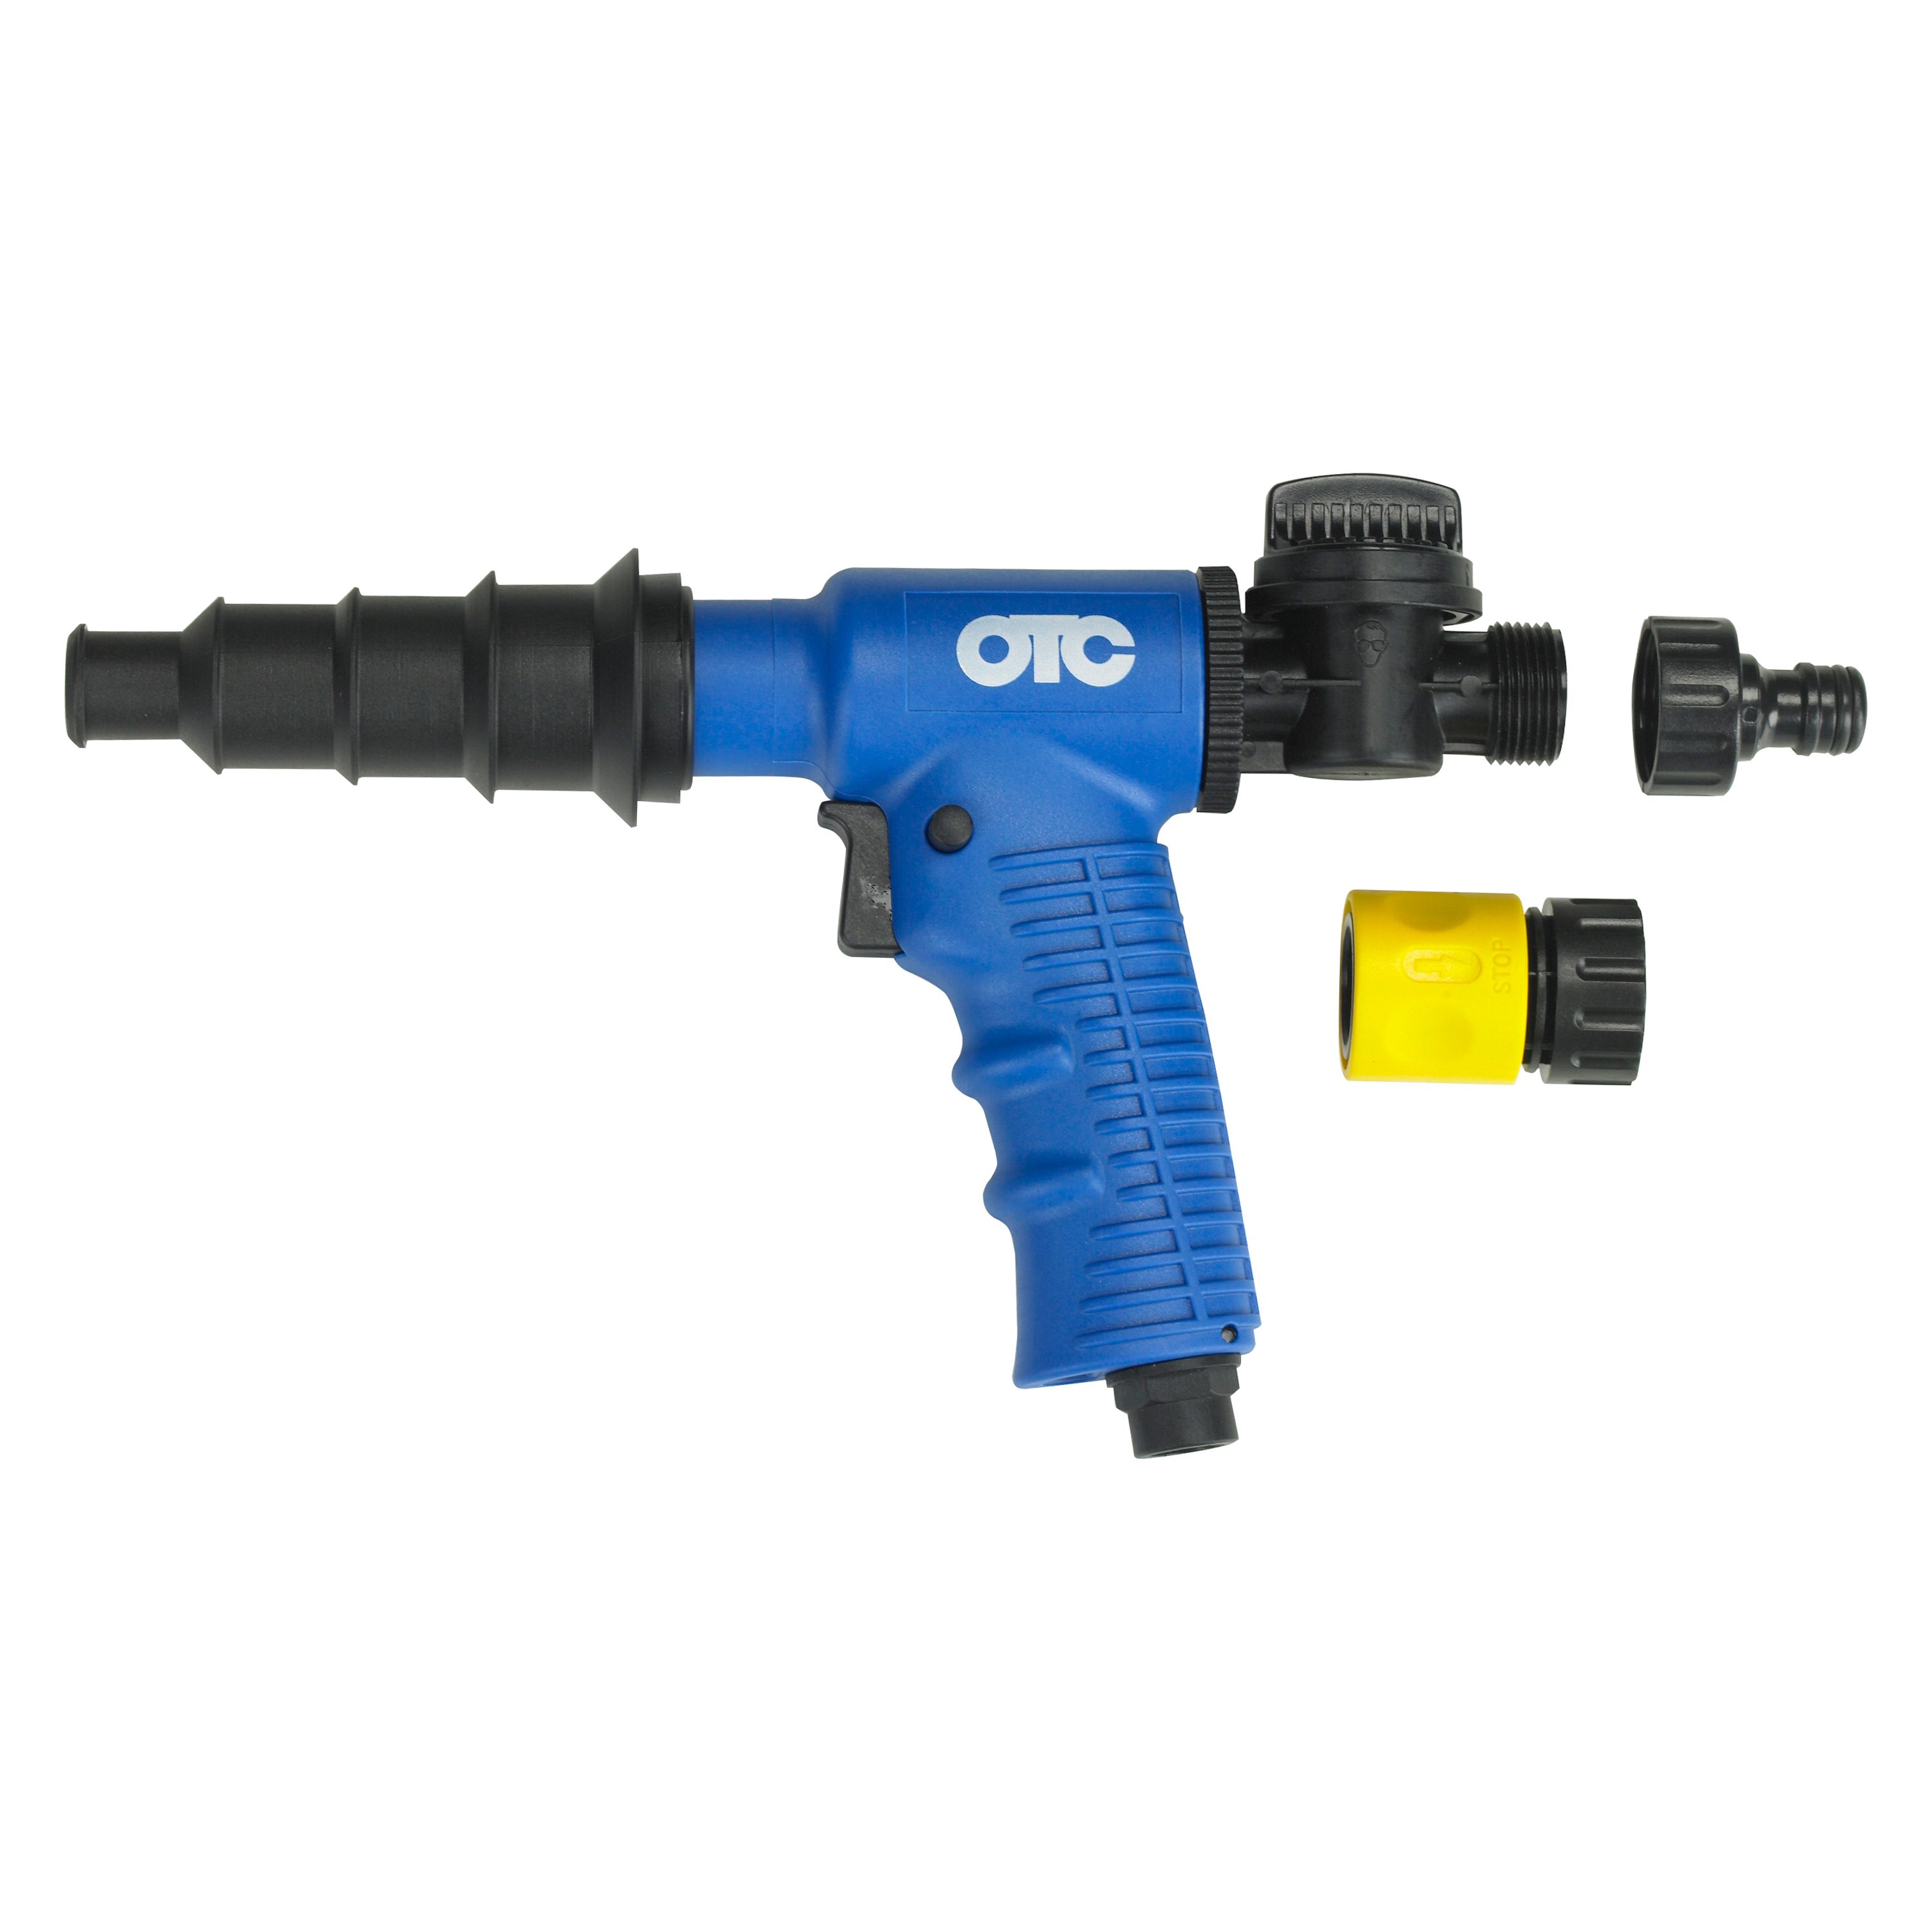 otc-6043-blast-vac-multipurpose-cleaning-gun-toolsid